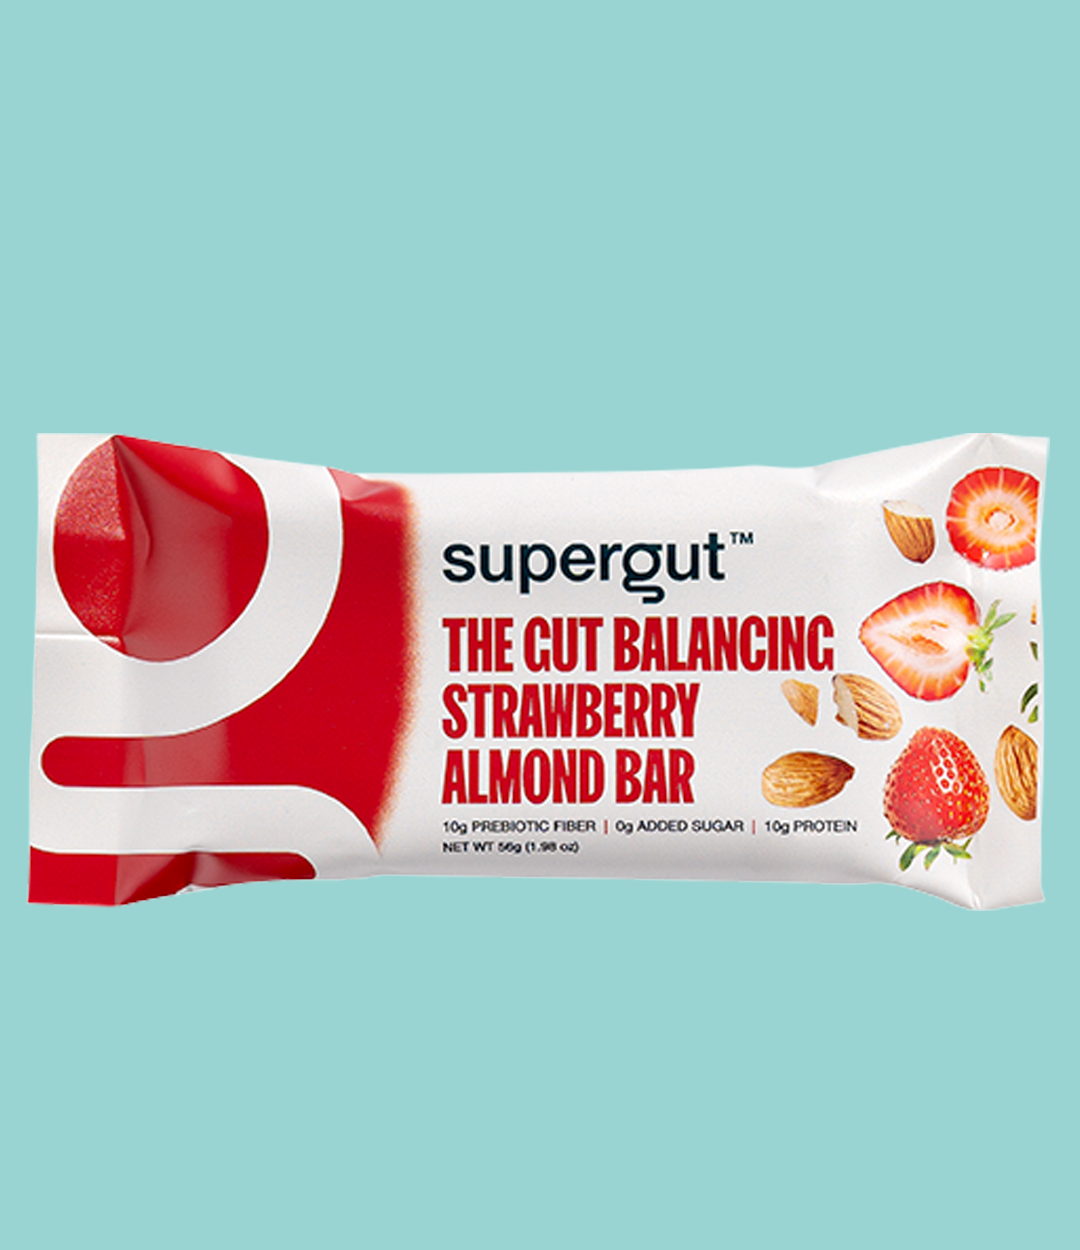 The Gut Balancing Strawberry Almond Bar